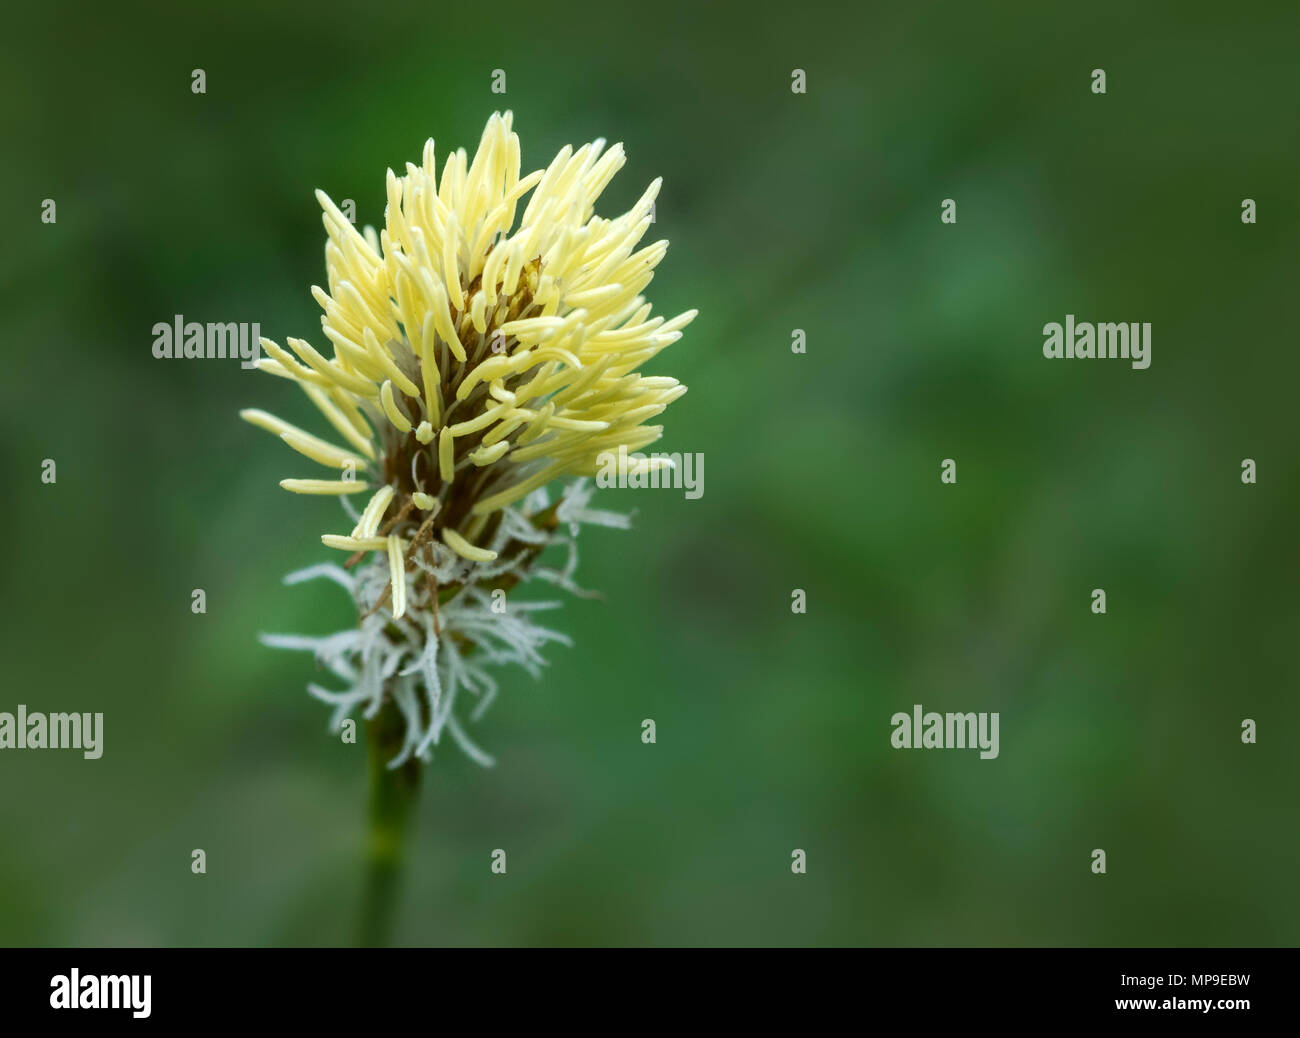 Feder Segge (Carex 'Silver Sceptre) Stockfoto